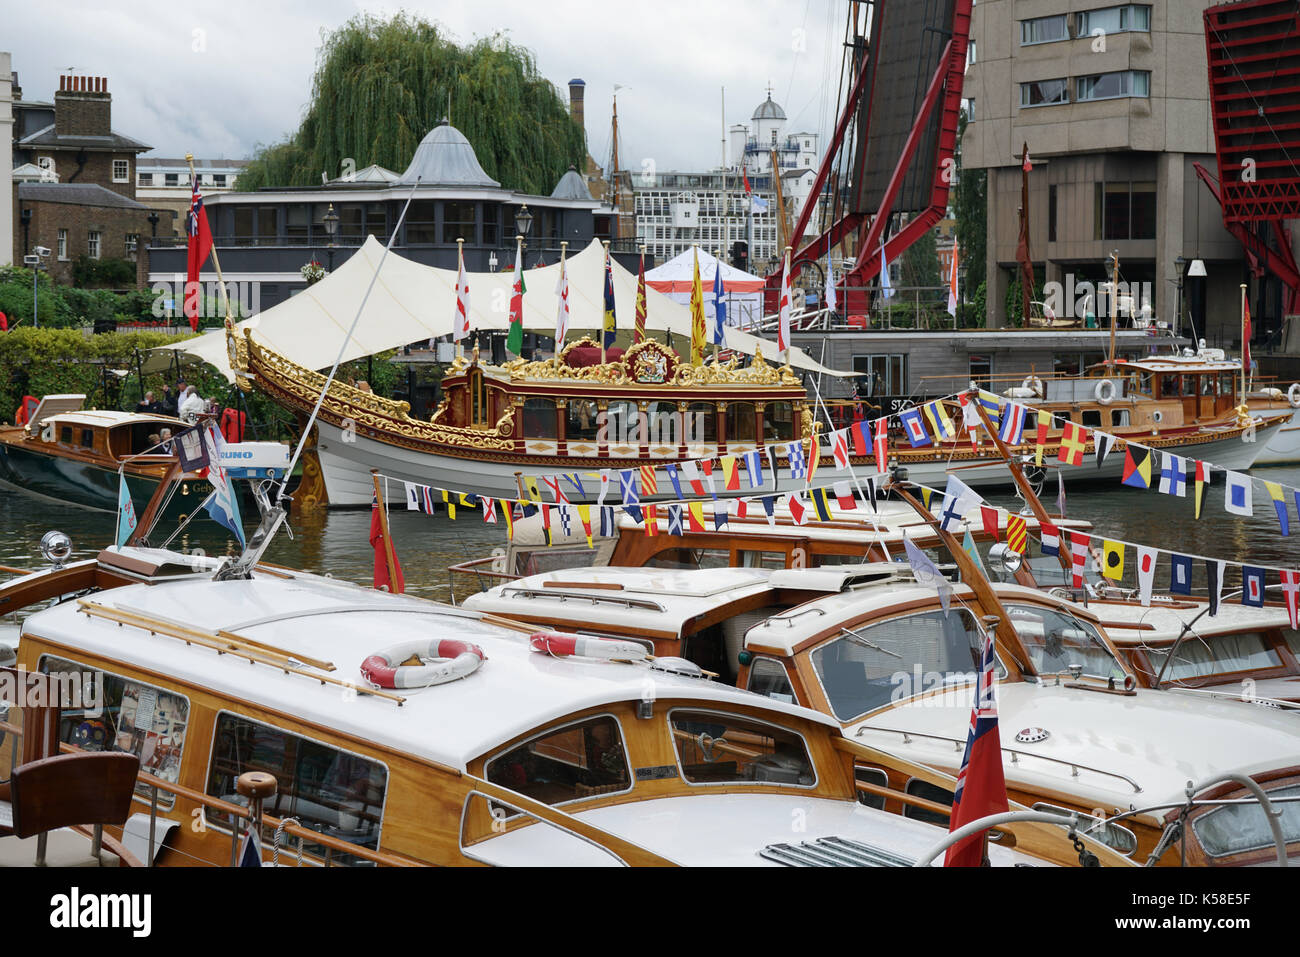 London, England, UK. 8th September 2017. The 9th year of Classic Boat Festival at St. Katharine Docks, London, UK. Stock Photo